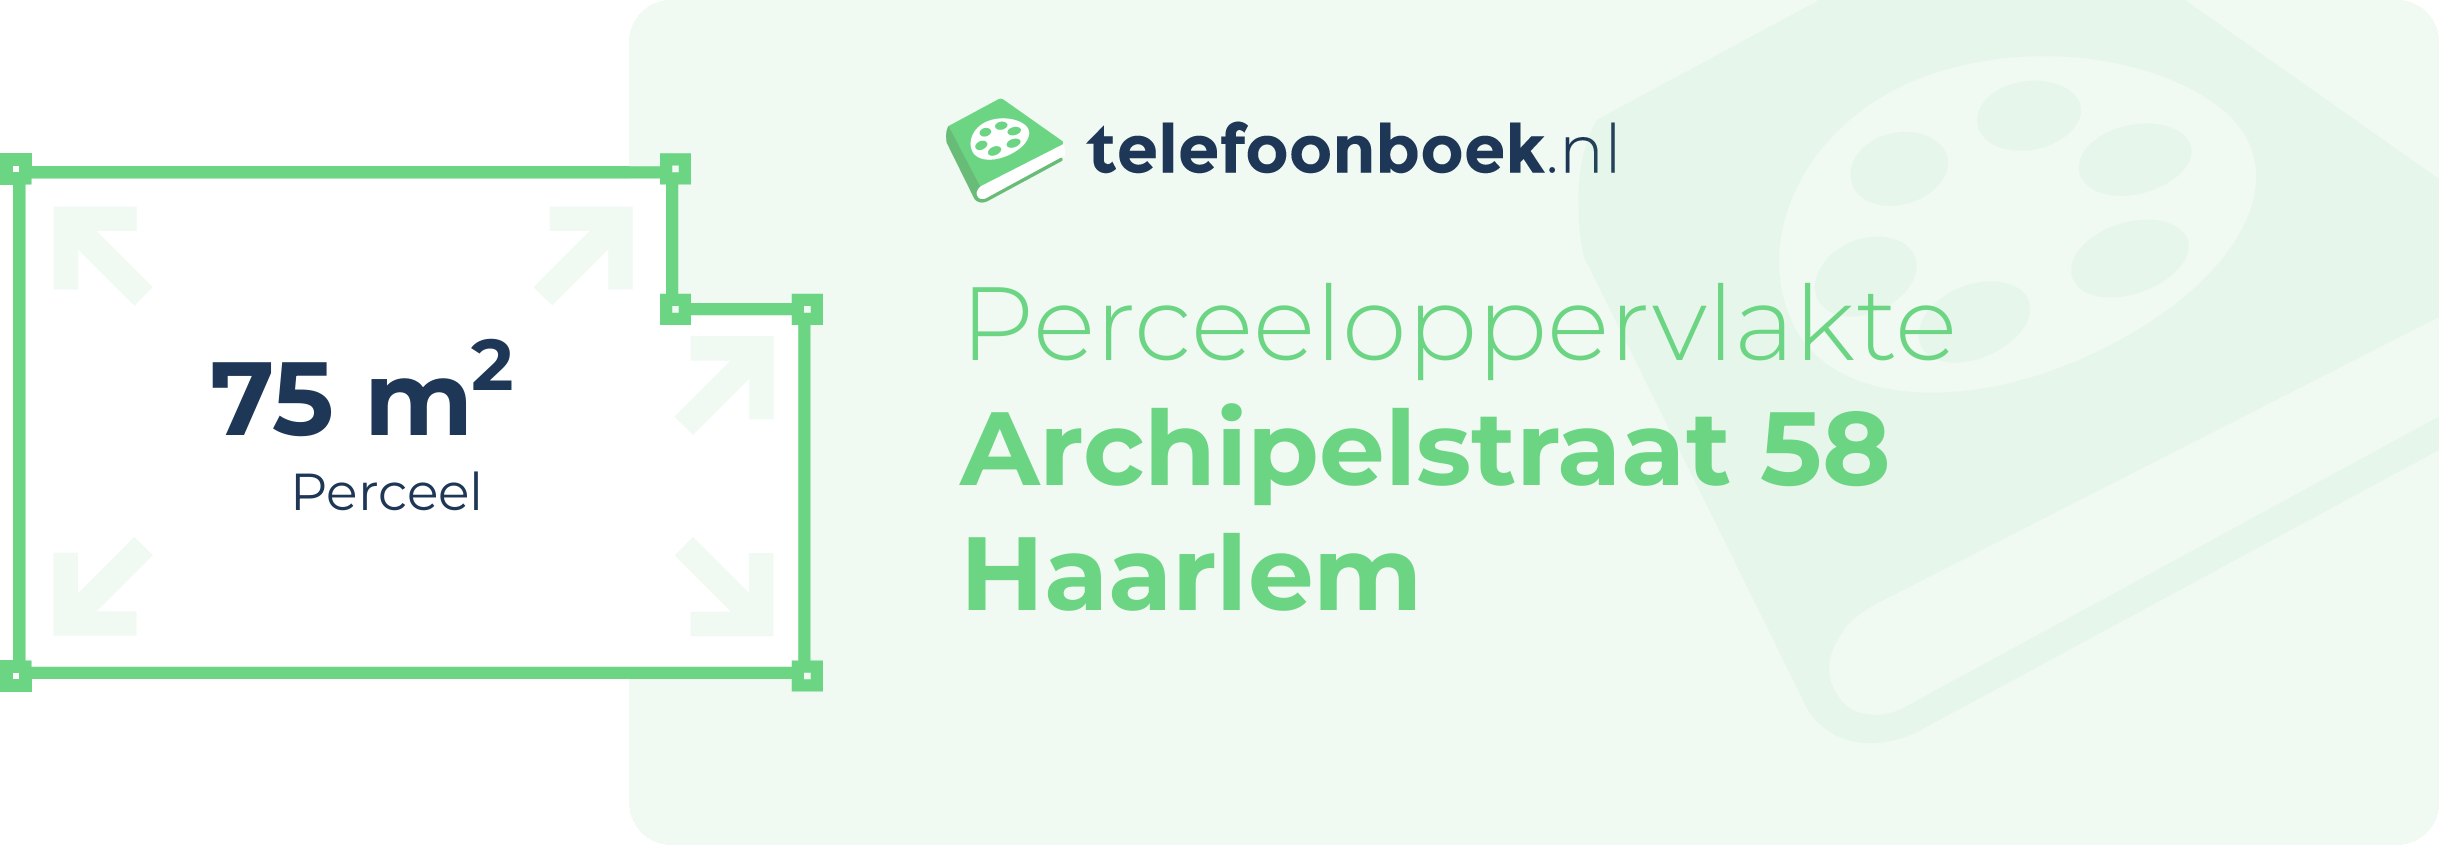 Perceeloppervlakte Archipelstraat 58 Haarlem